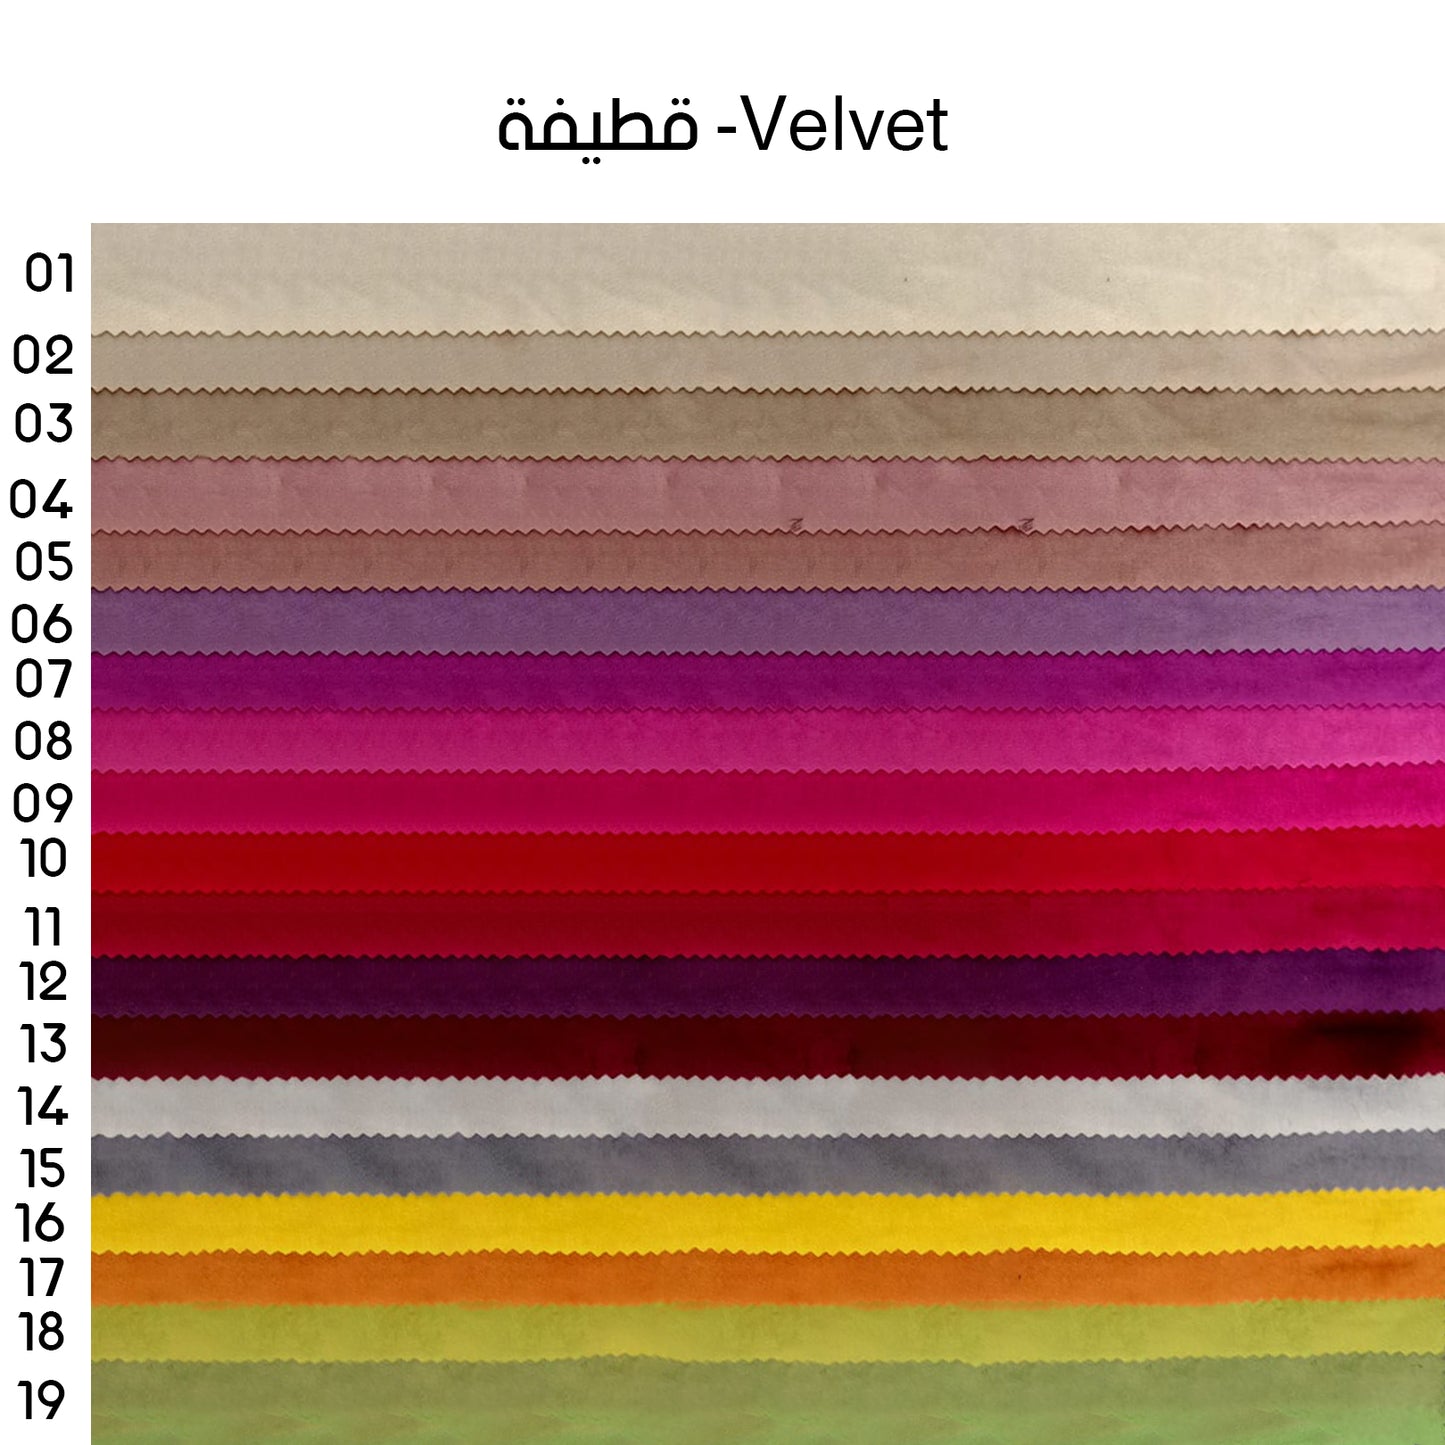 Natural beech wood sofa, 85 x 210 cm - multiple colors - DECO13